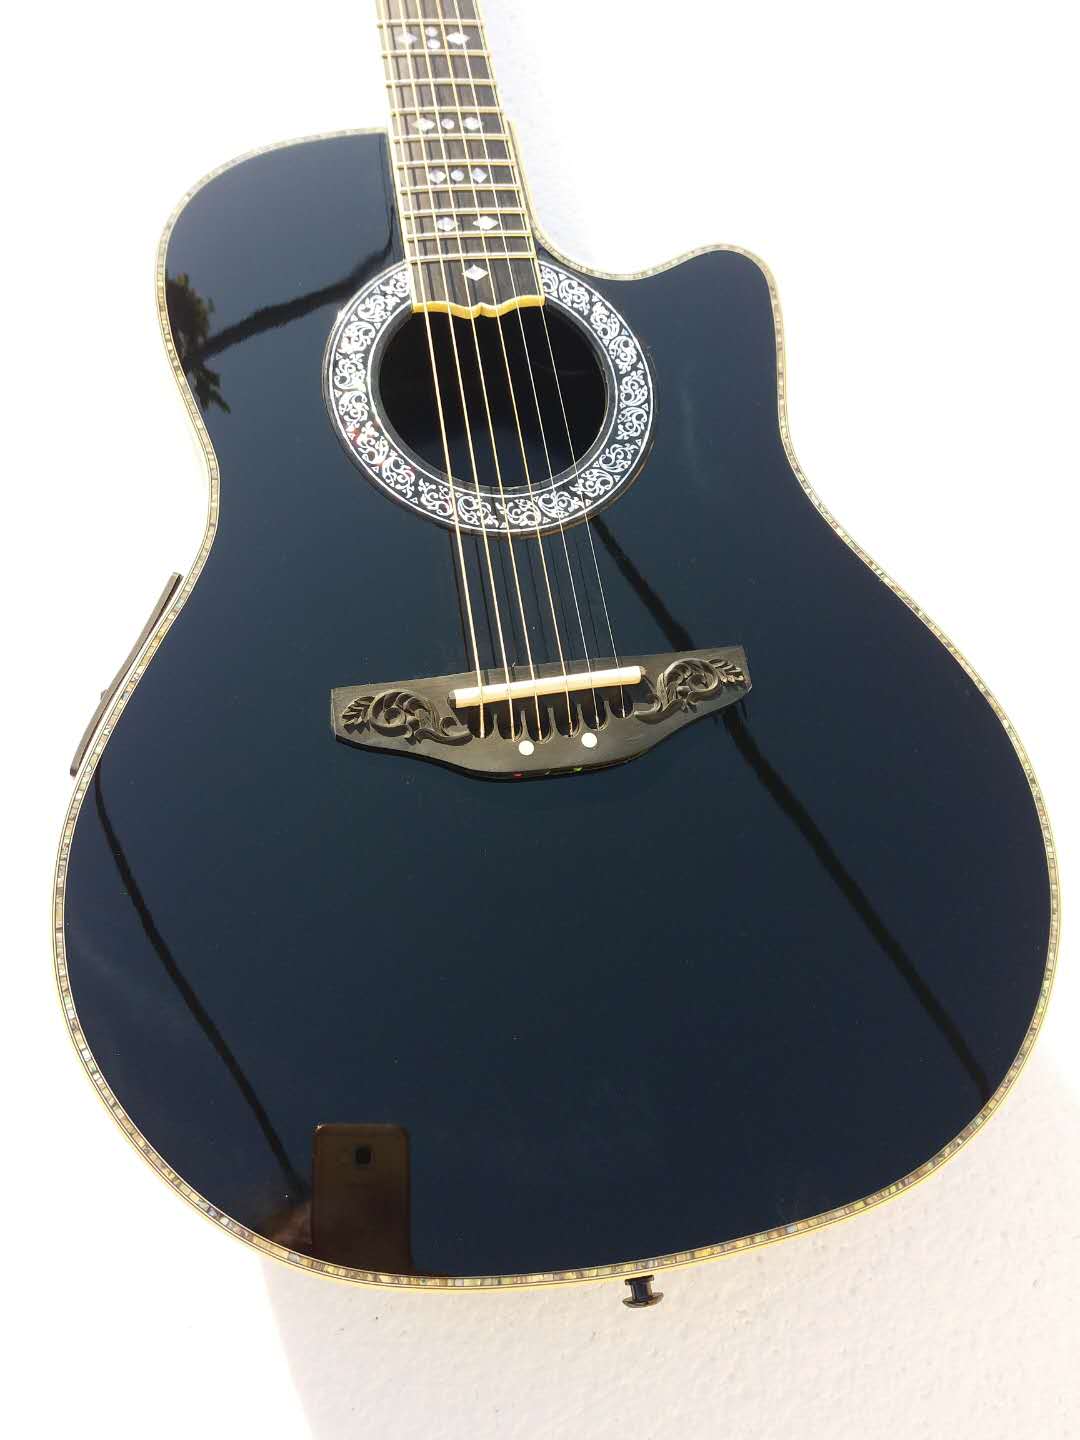 Carbon Fibre Body 6 Строки Оджация Акустическая Электрическая гитара Ebony Fretboard с F-5T Preamp Pickup EQ Профессиональная народная гитаре